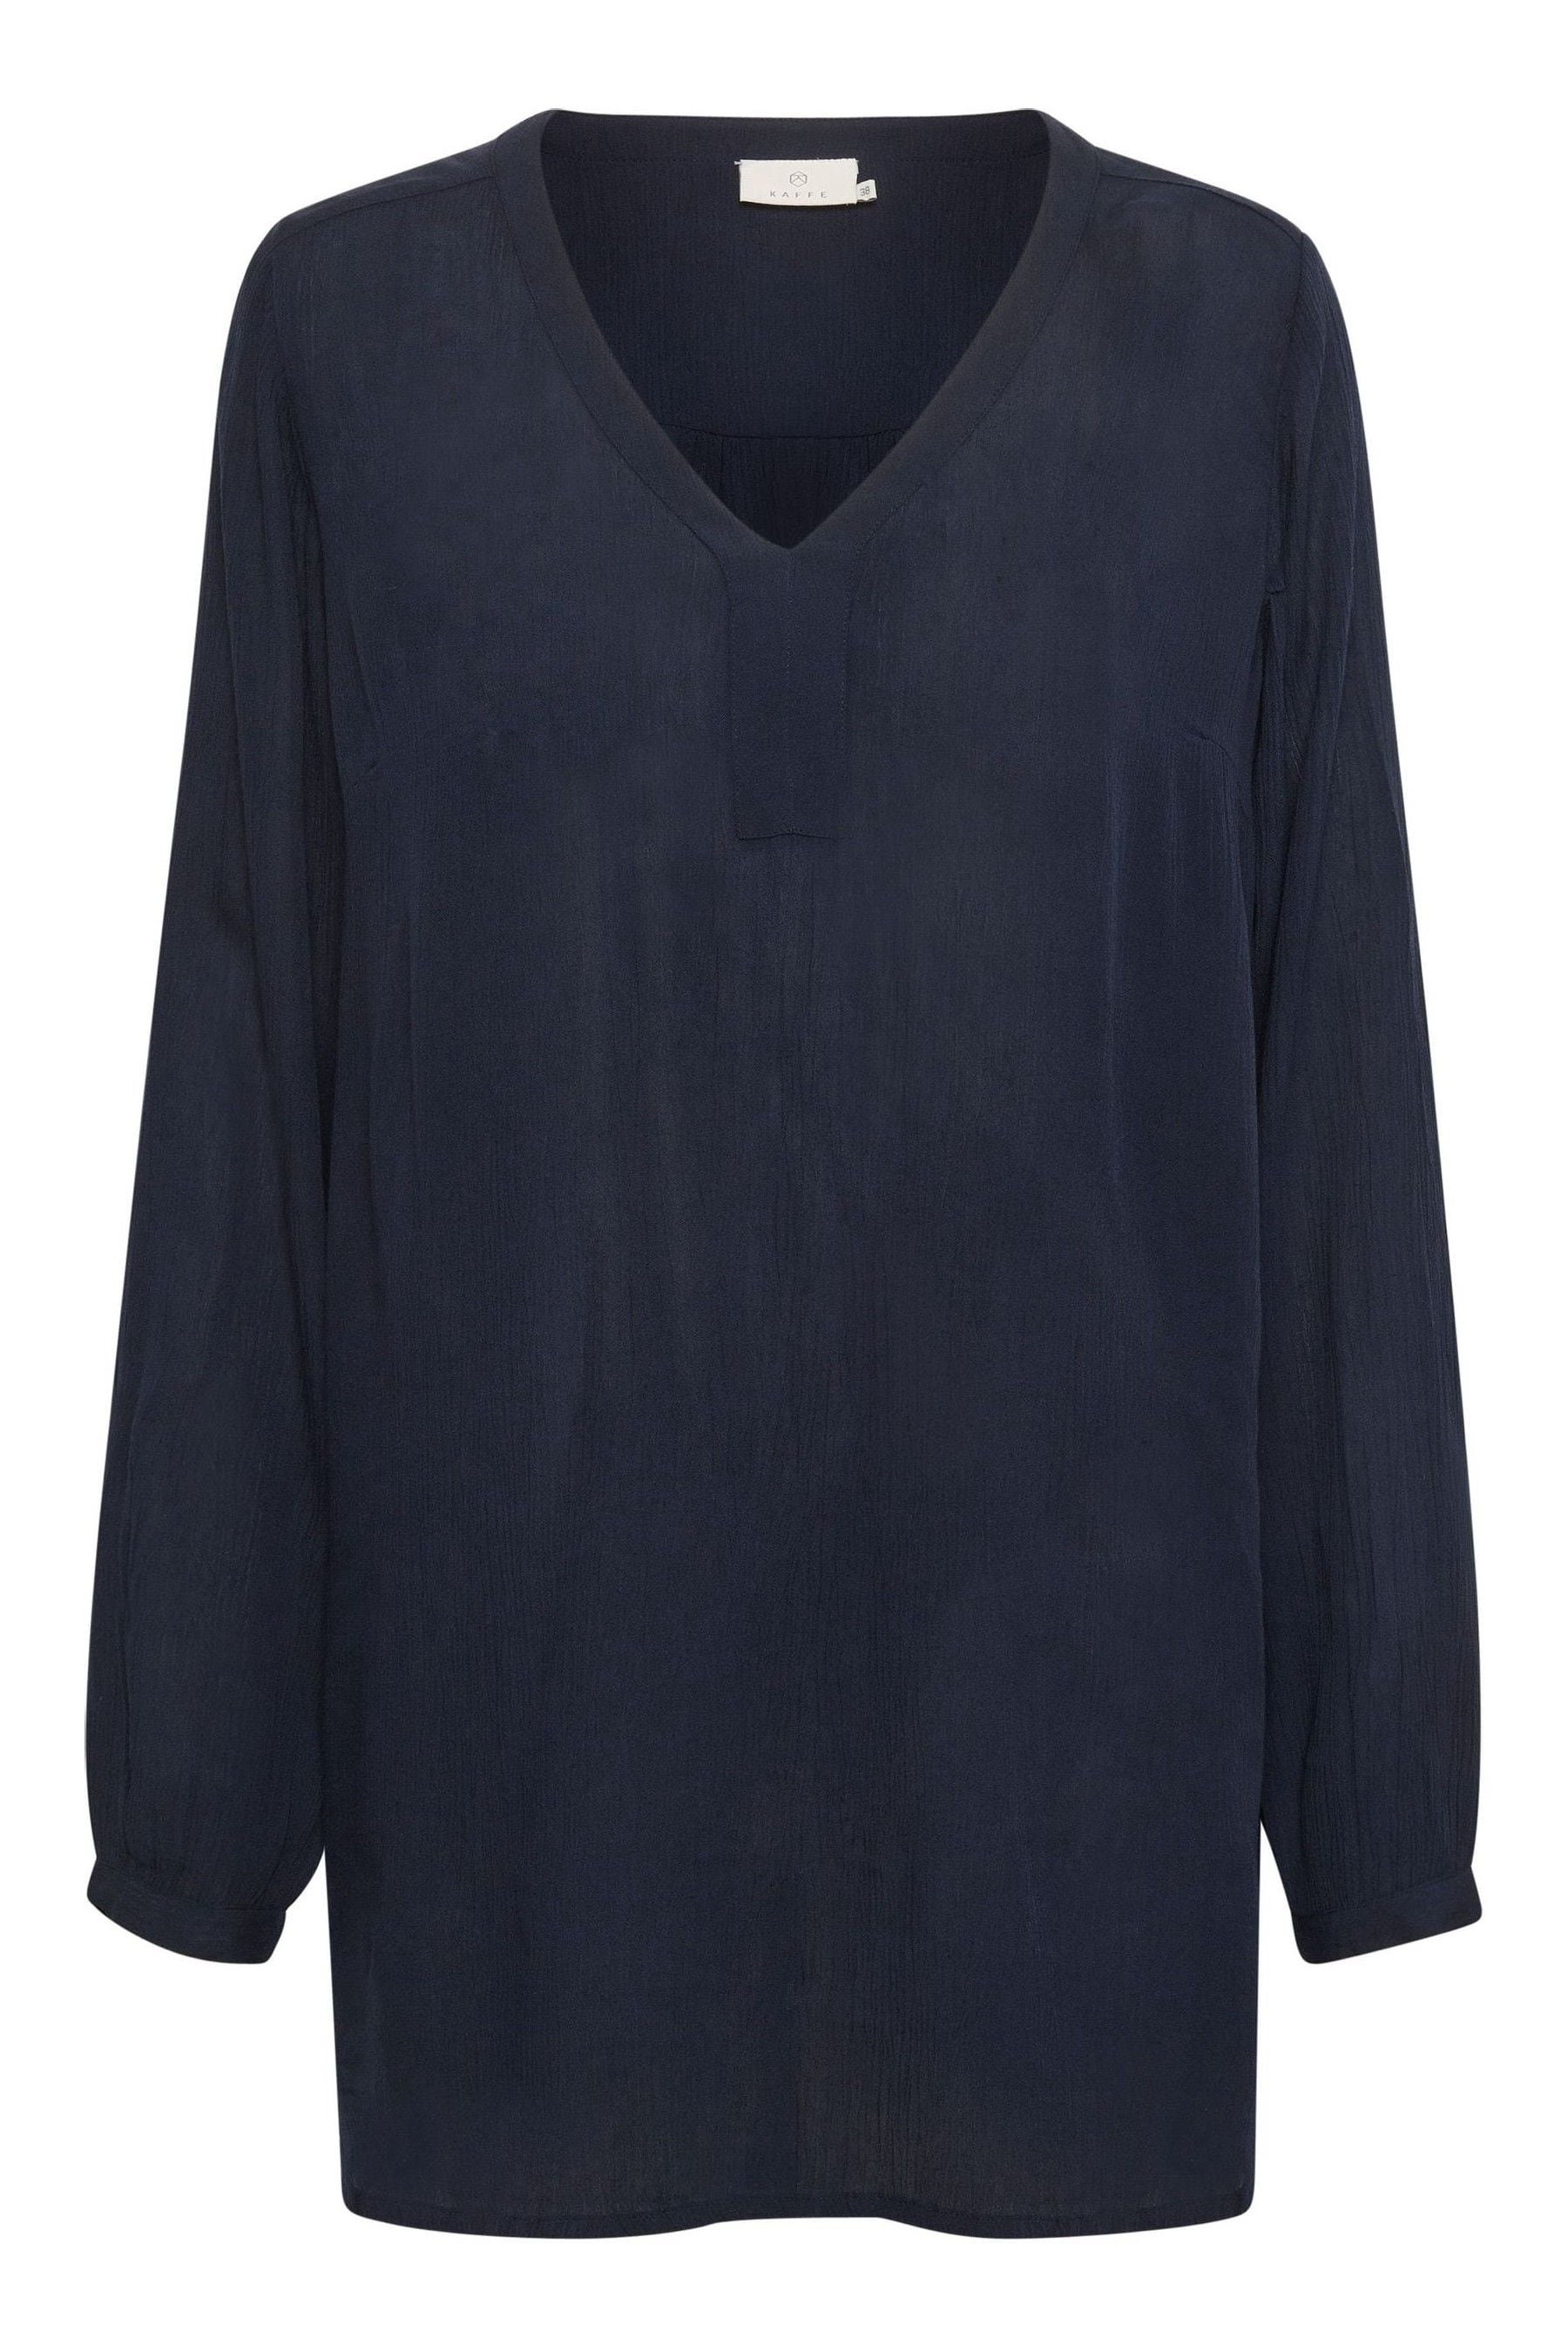 Buy Kaffe Blue Amber V-Neck Long Sleeve Tunic from the Next UK online shop